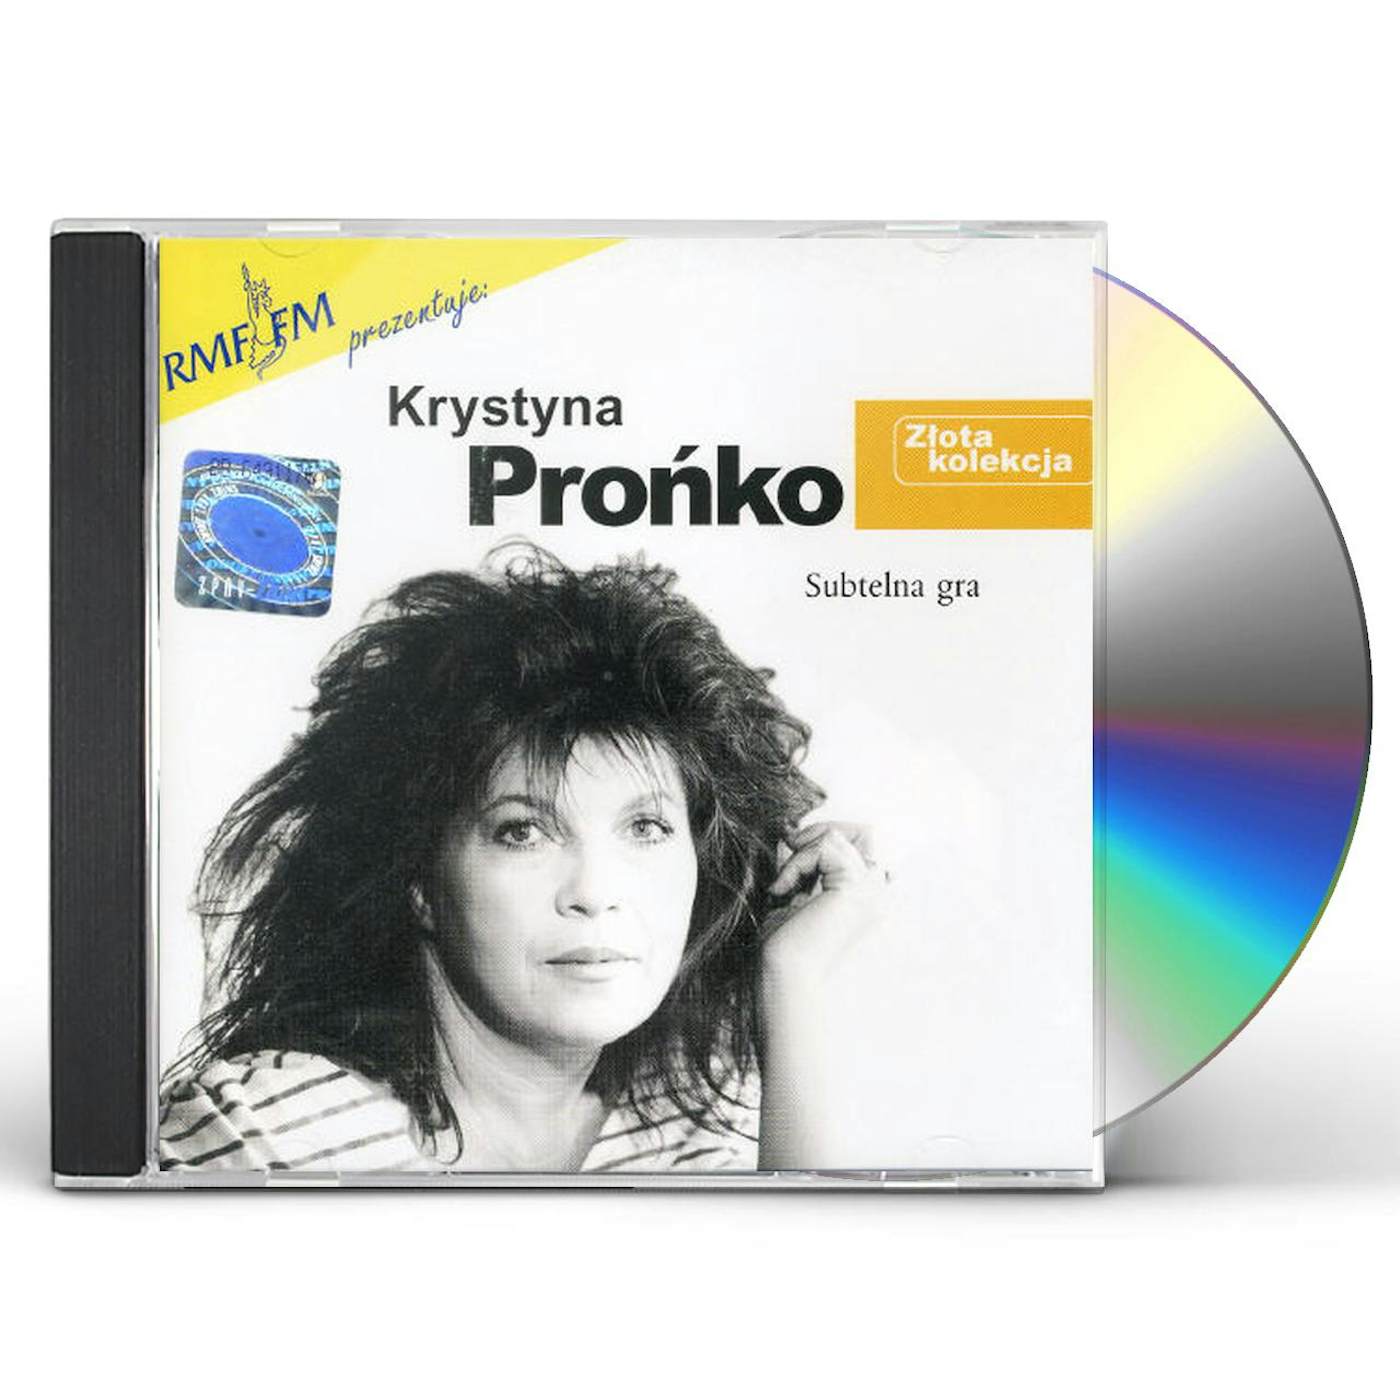 Krystyna Prońko ZLOTA KOLEKCJA CD